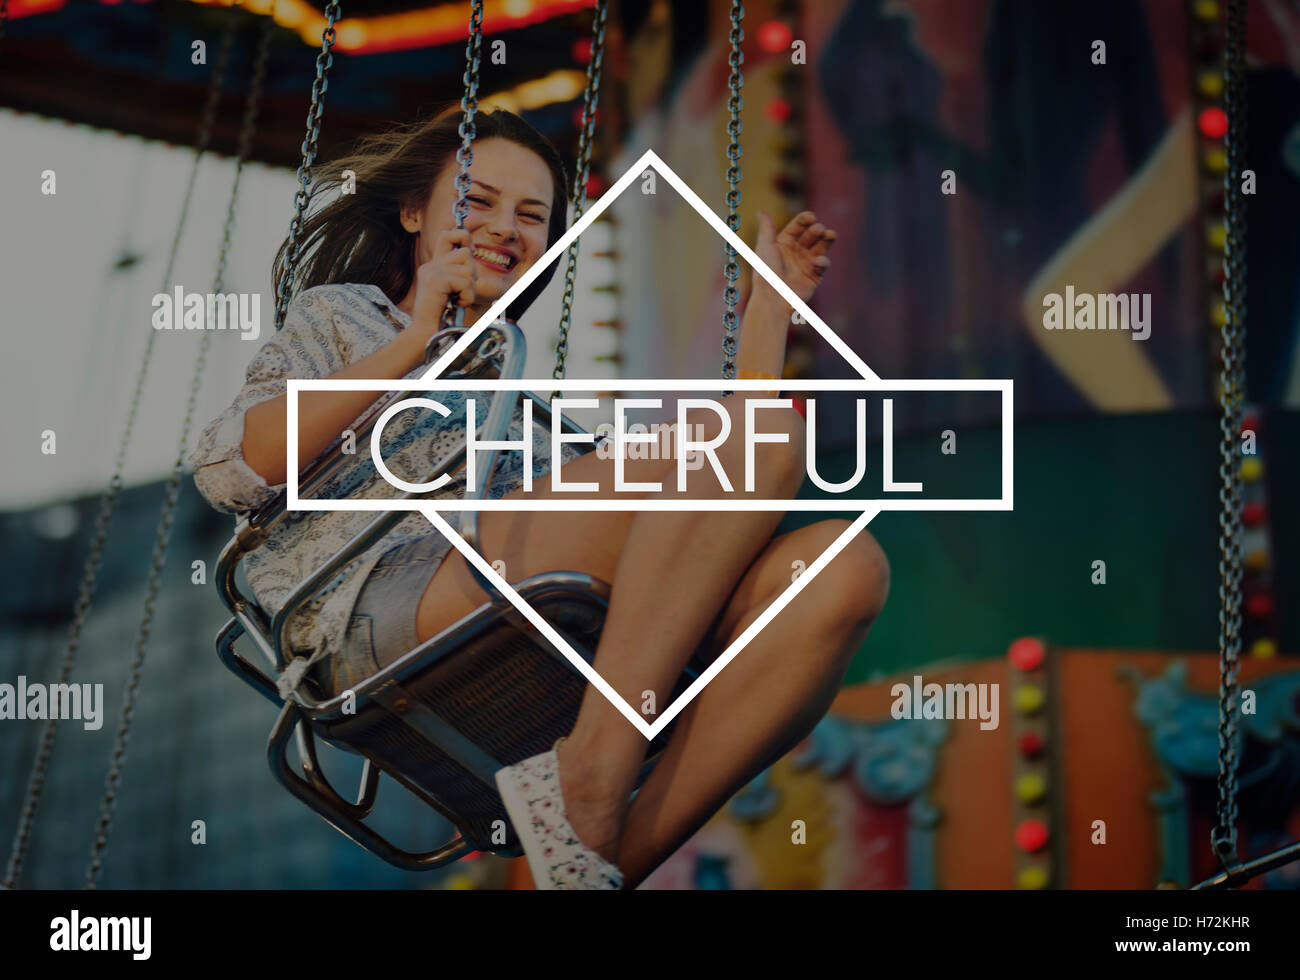 Cheerful Amusement Park Carnival A Wonderful Life Concept Stock Photo